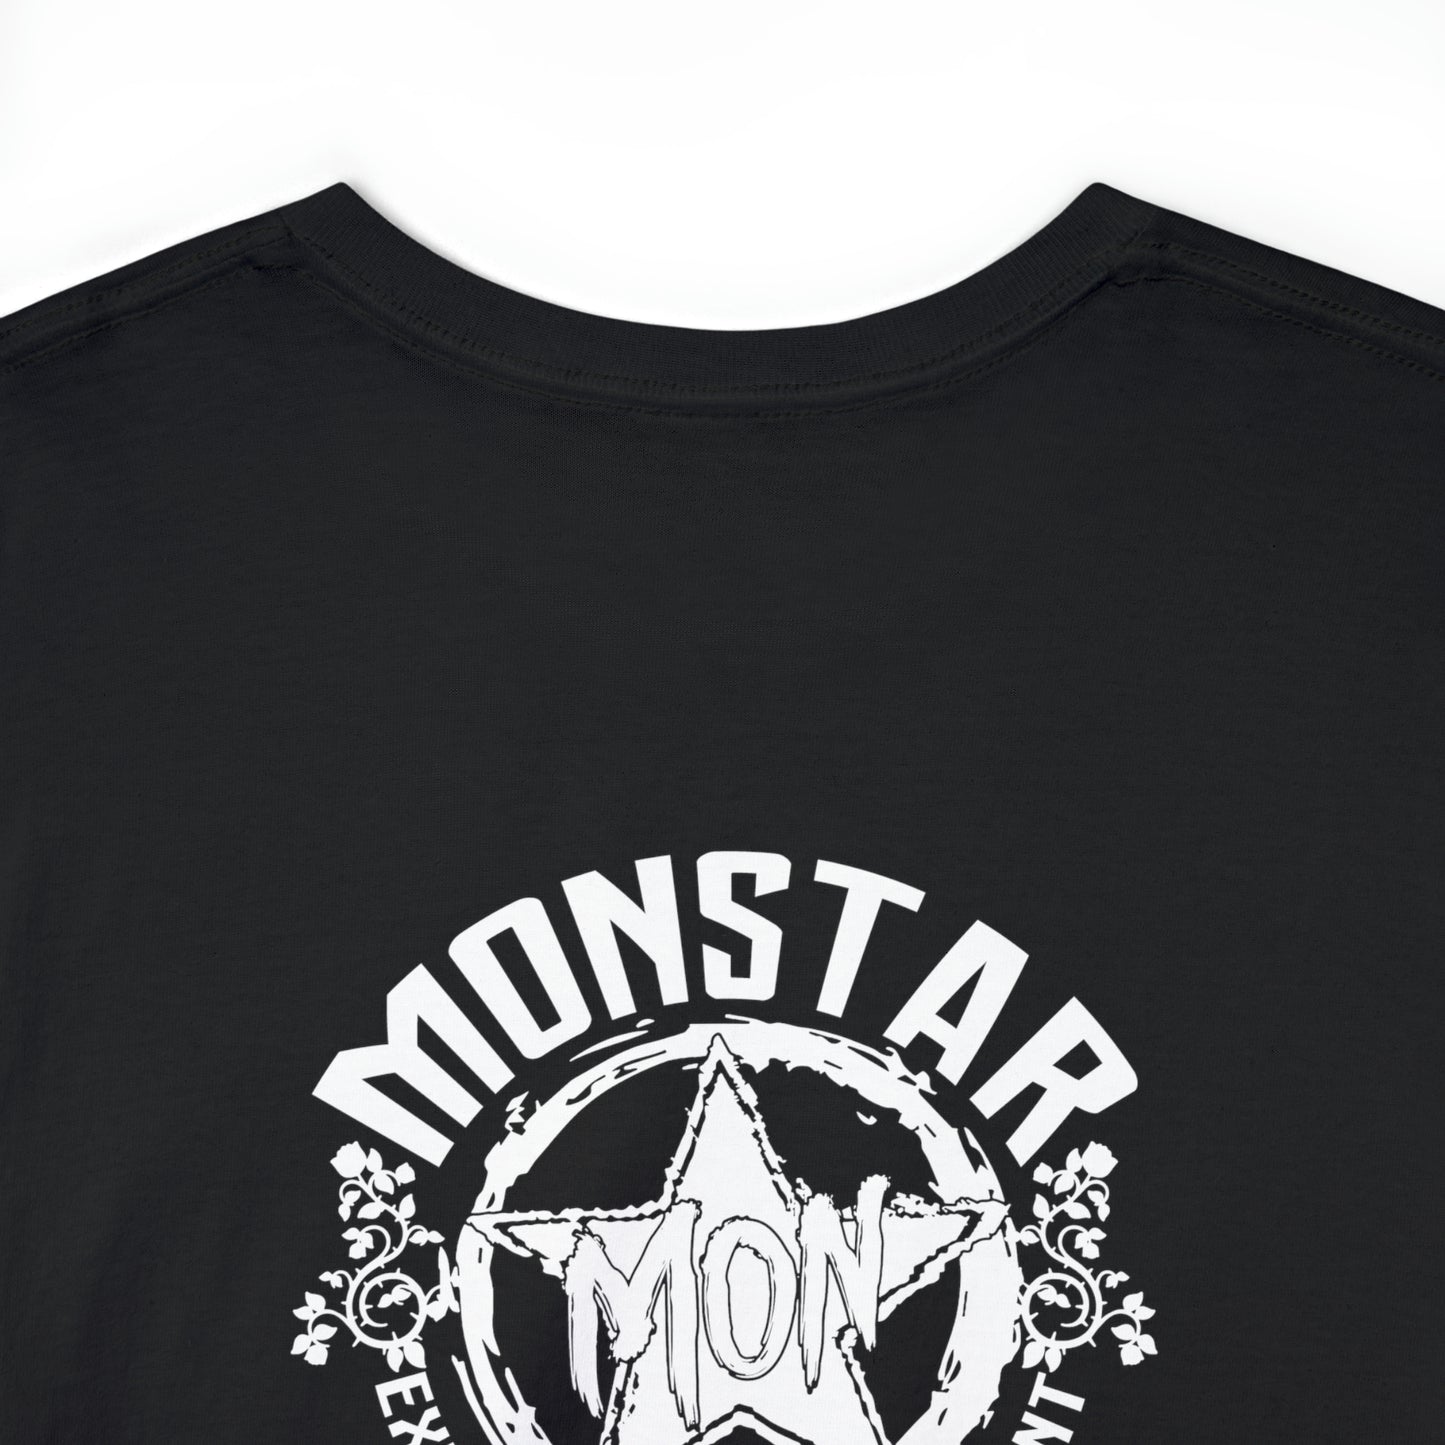 Monstar "Whiteout" T-Shirt